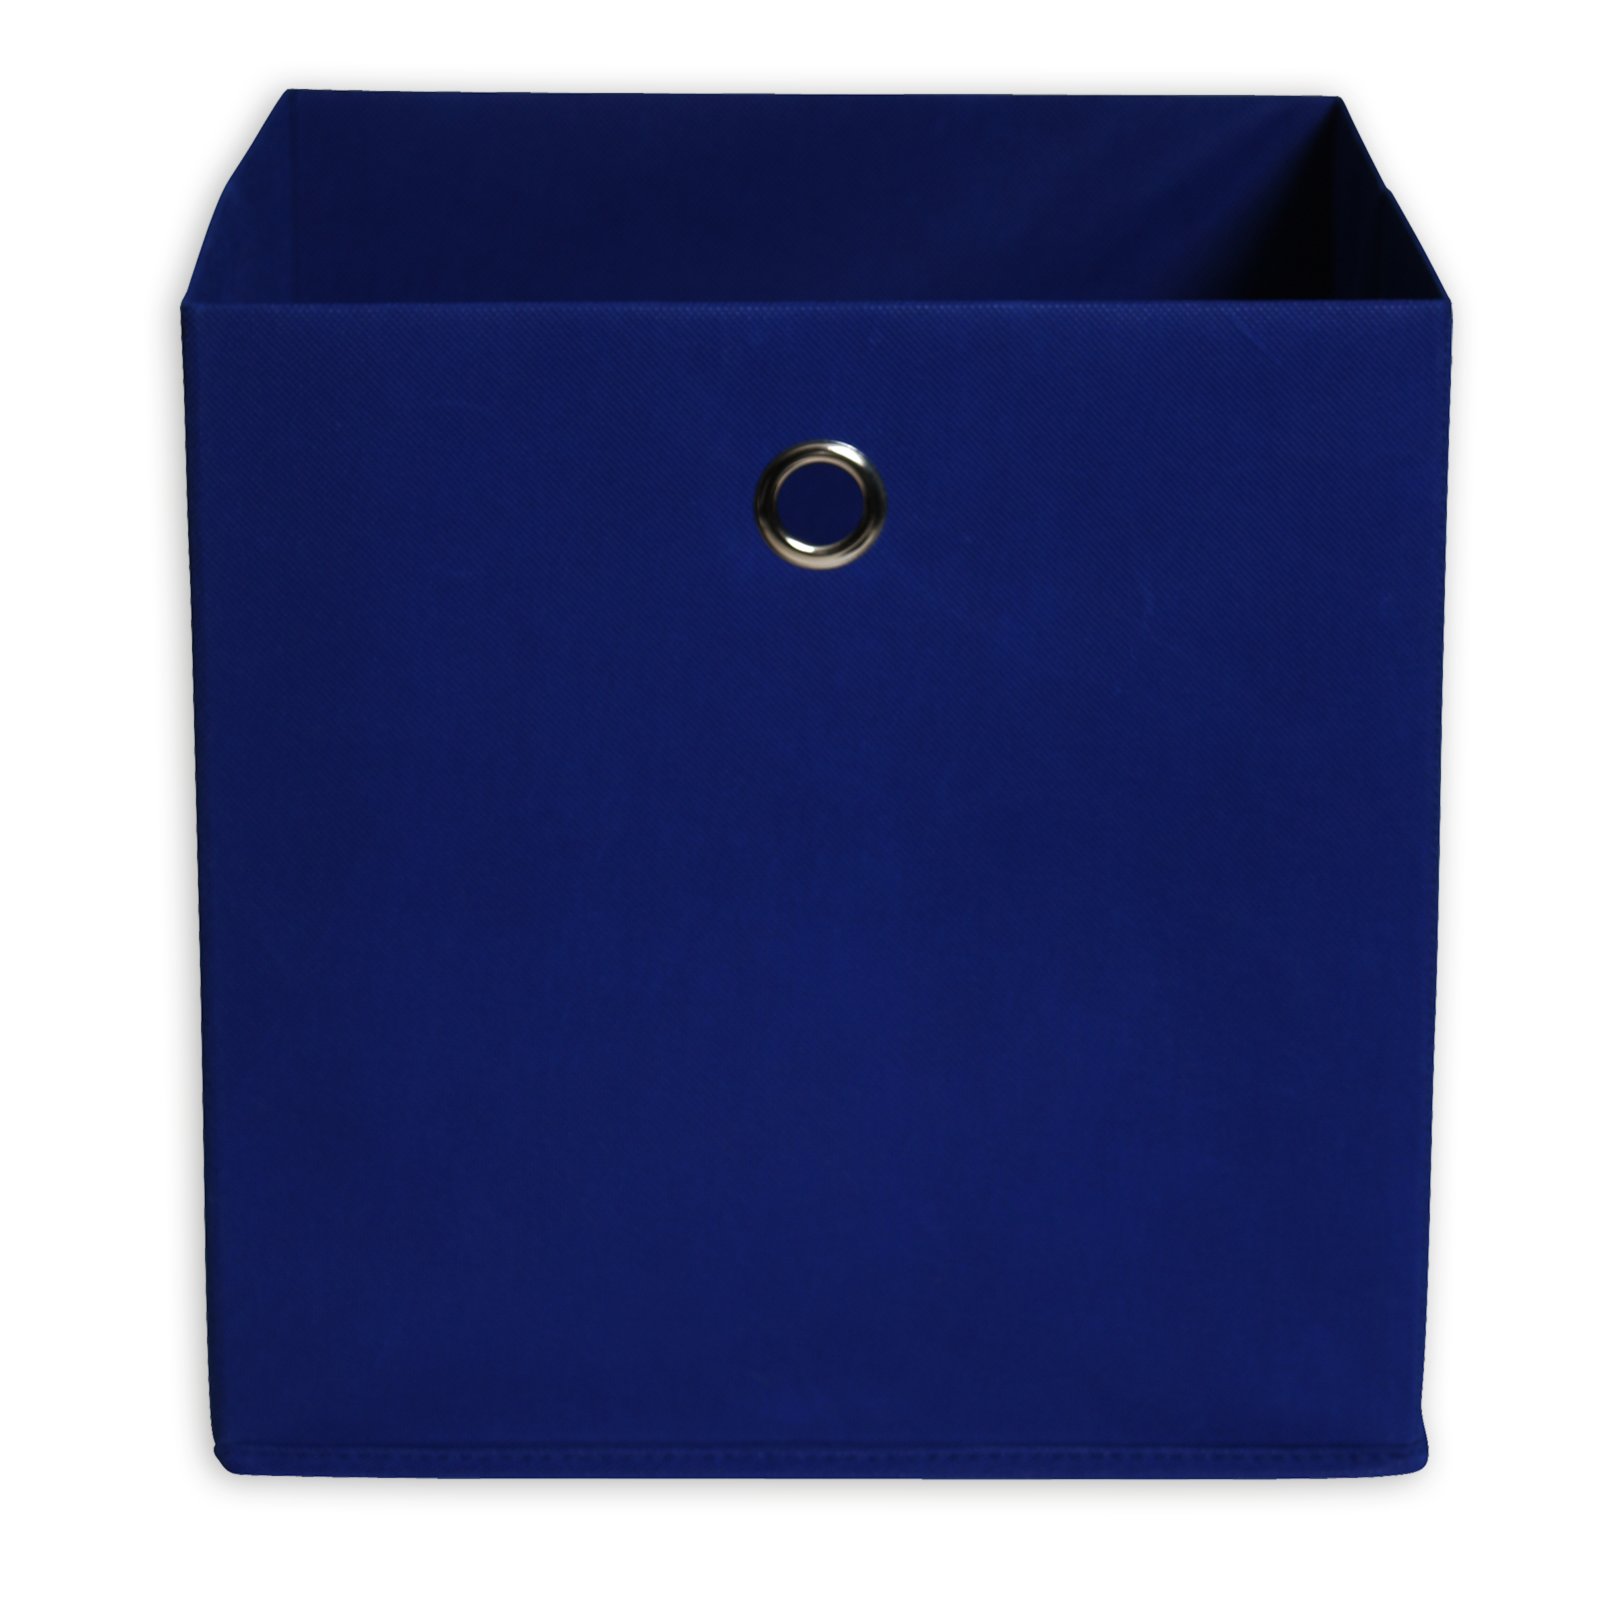 Faltbox - blau - mit Metallöse - 32x32 cm